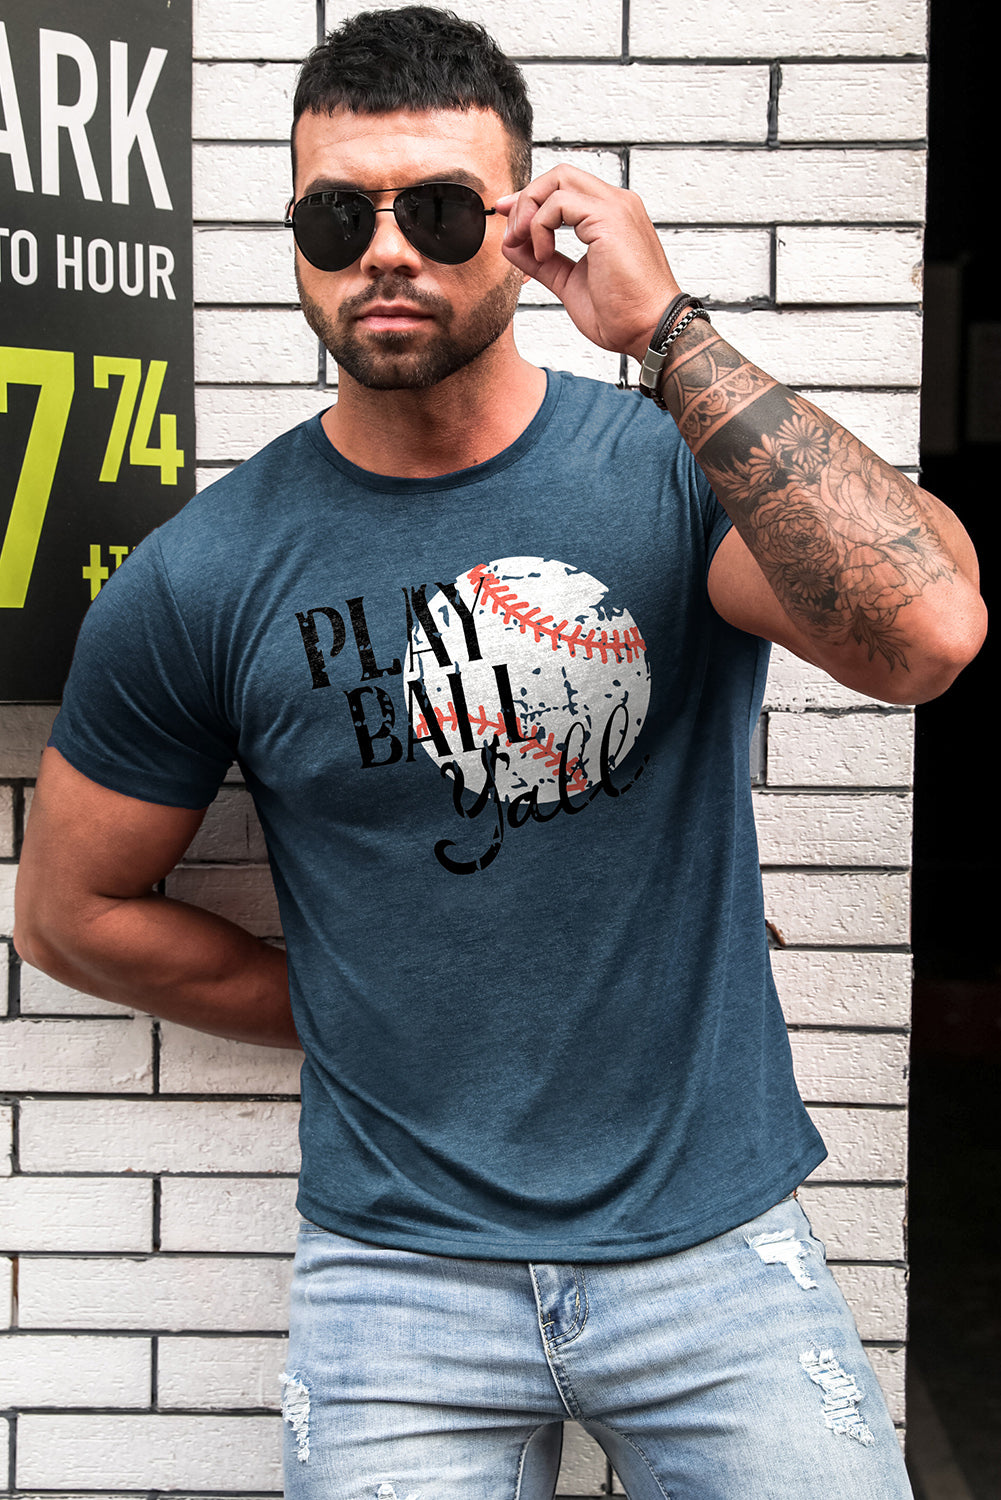 Playing Ball Y'all Baseball Print Slim Fit Short Sleeve Men's T Shirt